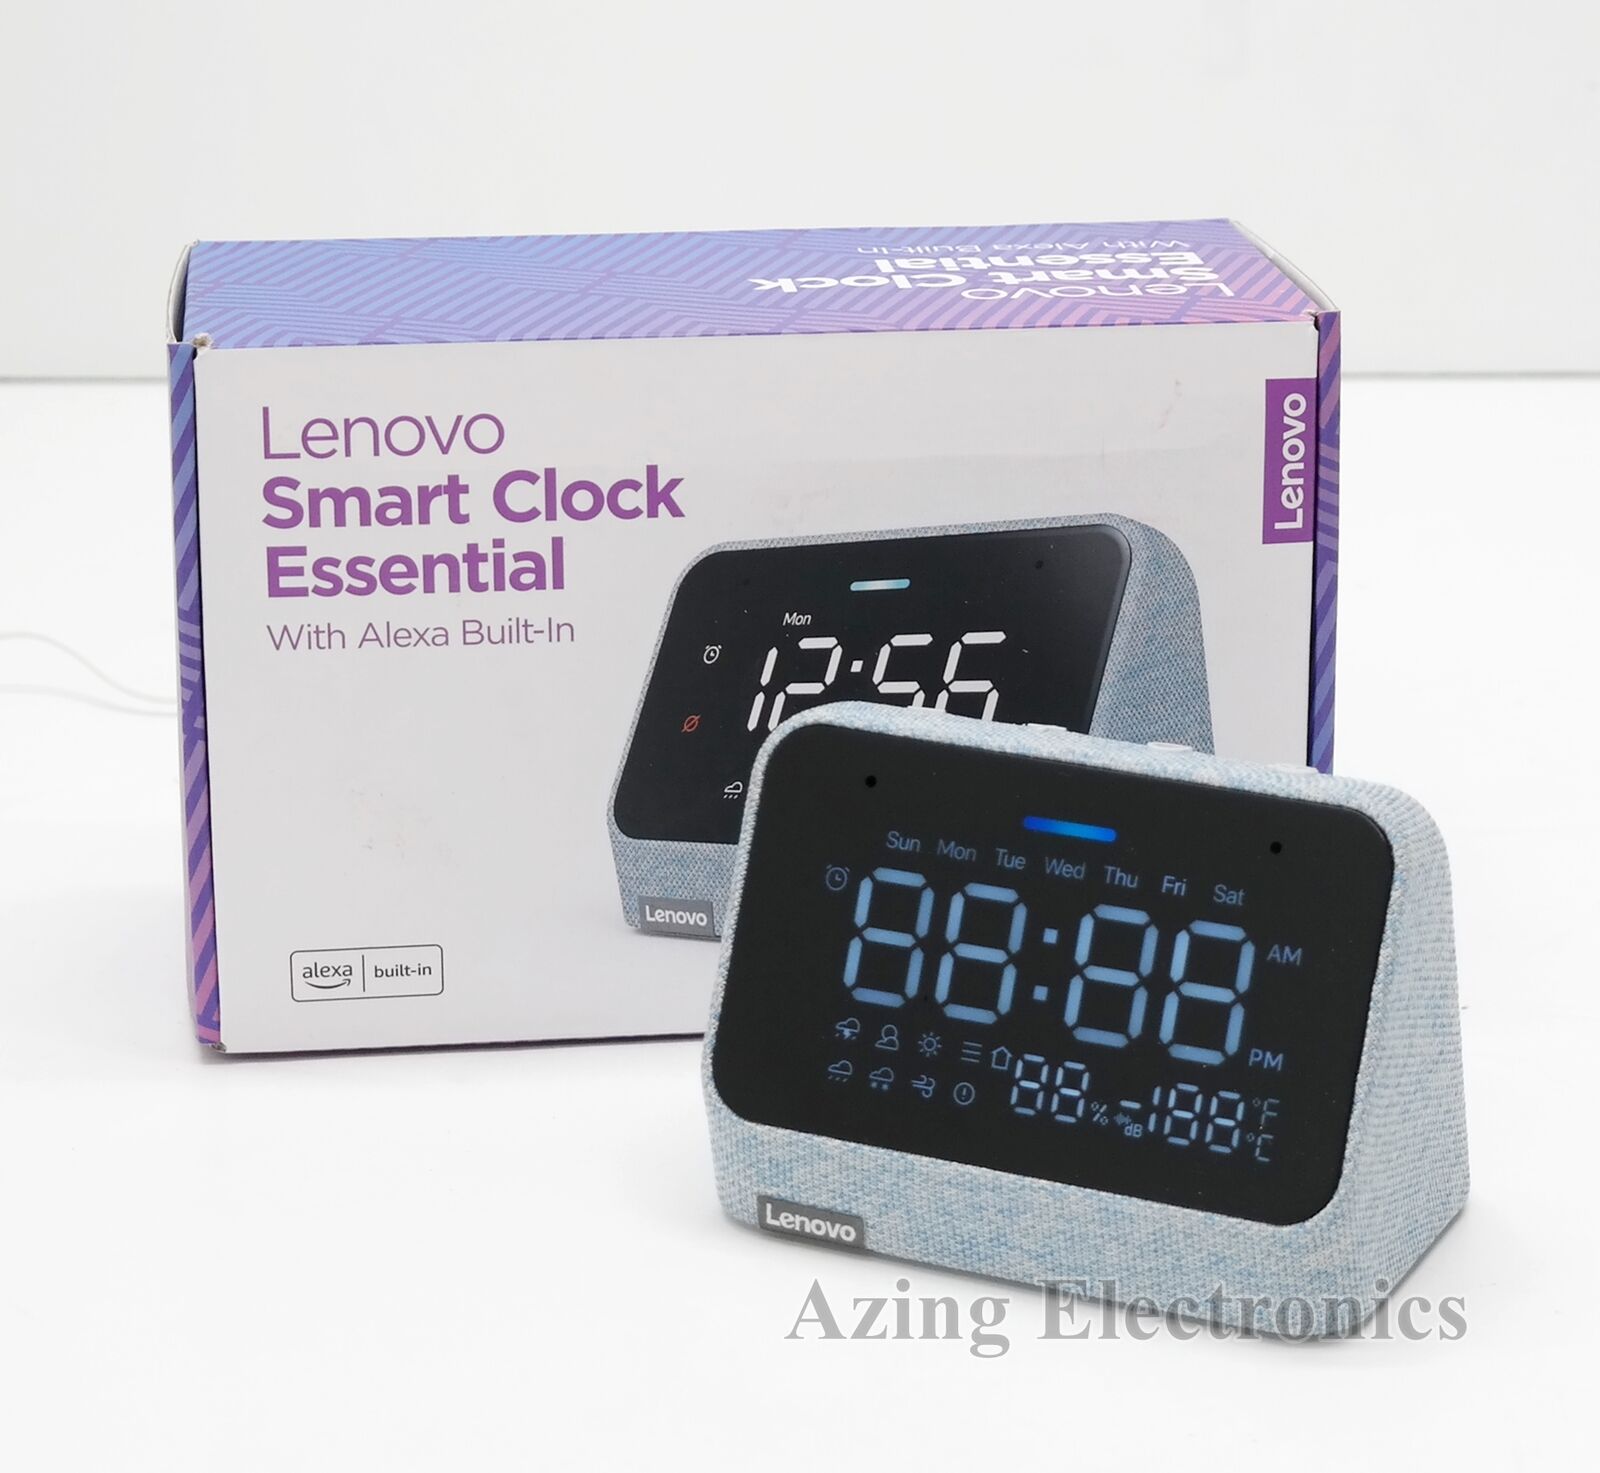 Lenovo CD-4N342Y Smart Clock Essential with Alexa Built In - Misty Blue  196118400419 | eBay